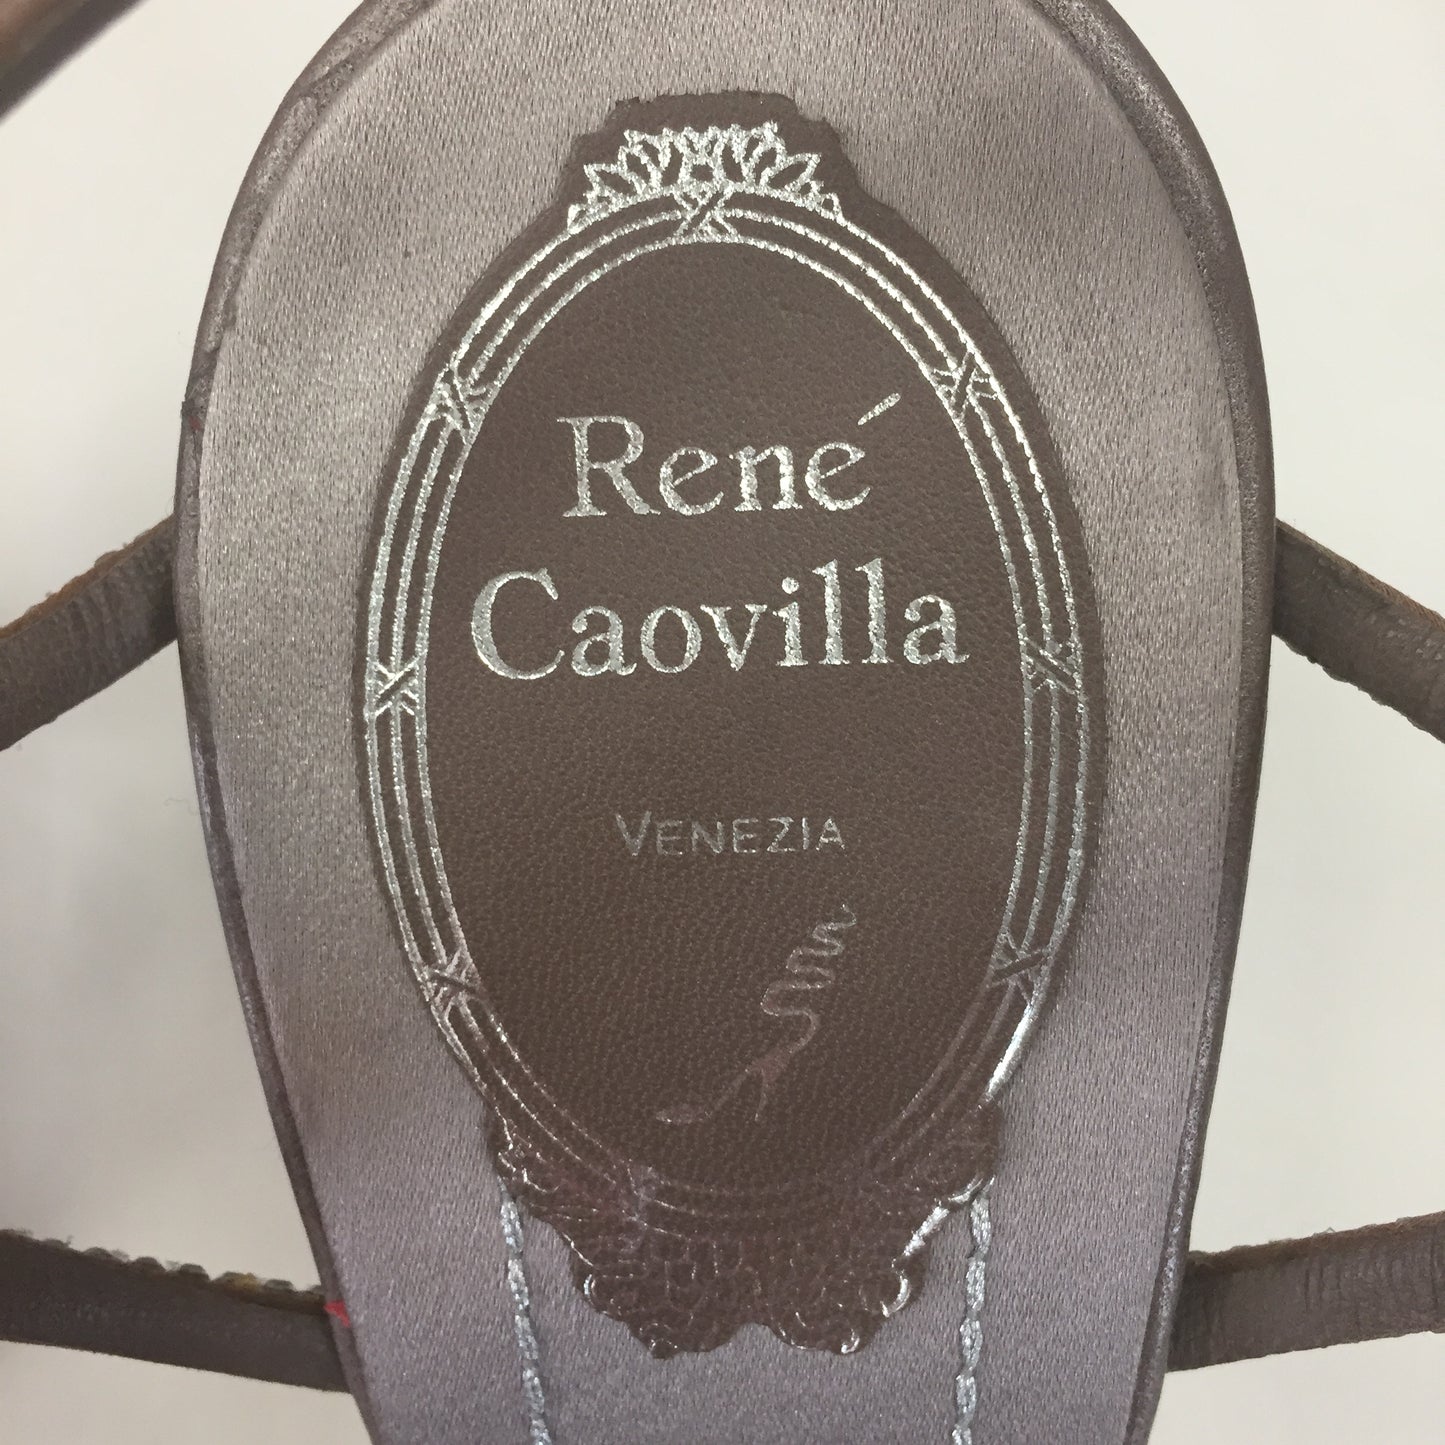 Authentic Rene Caovilla Taupe Selina Strass 85 Sandals Women's Size 38.5